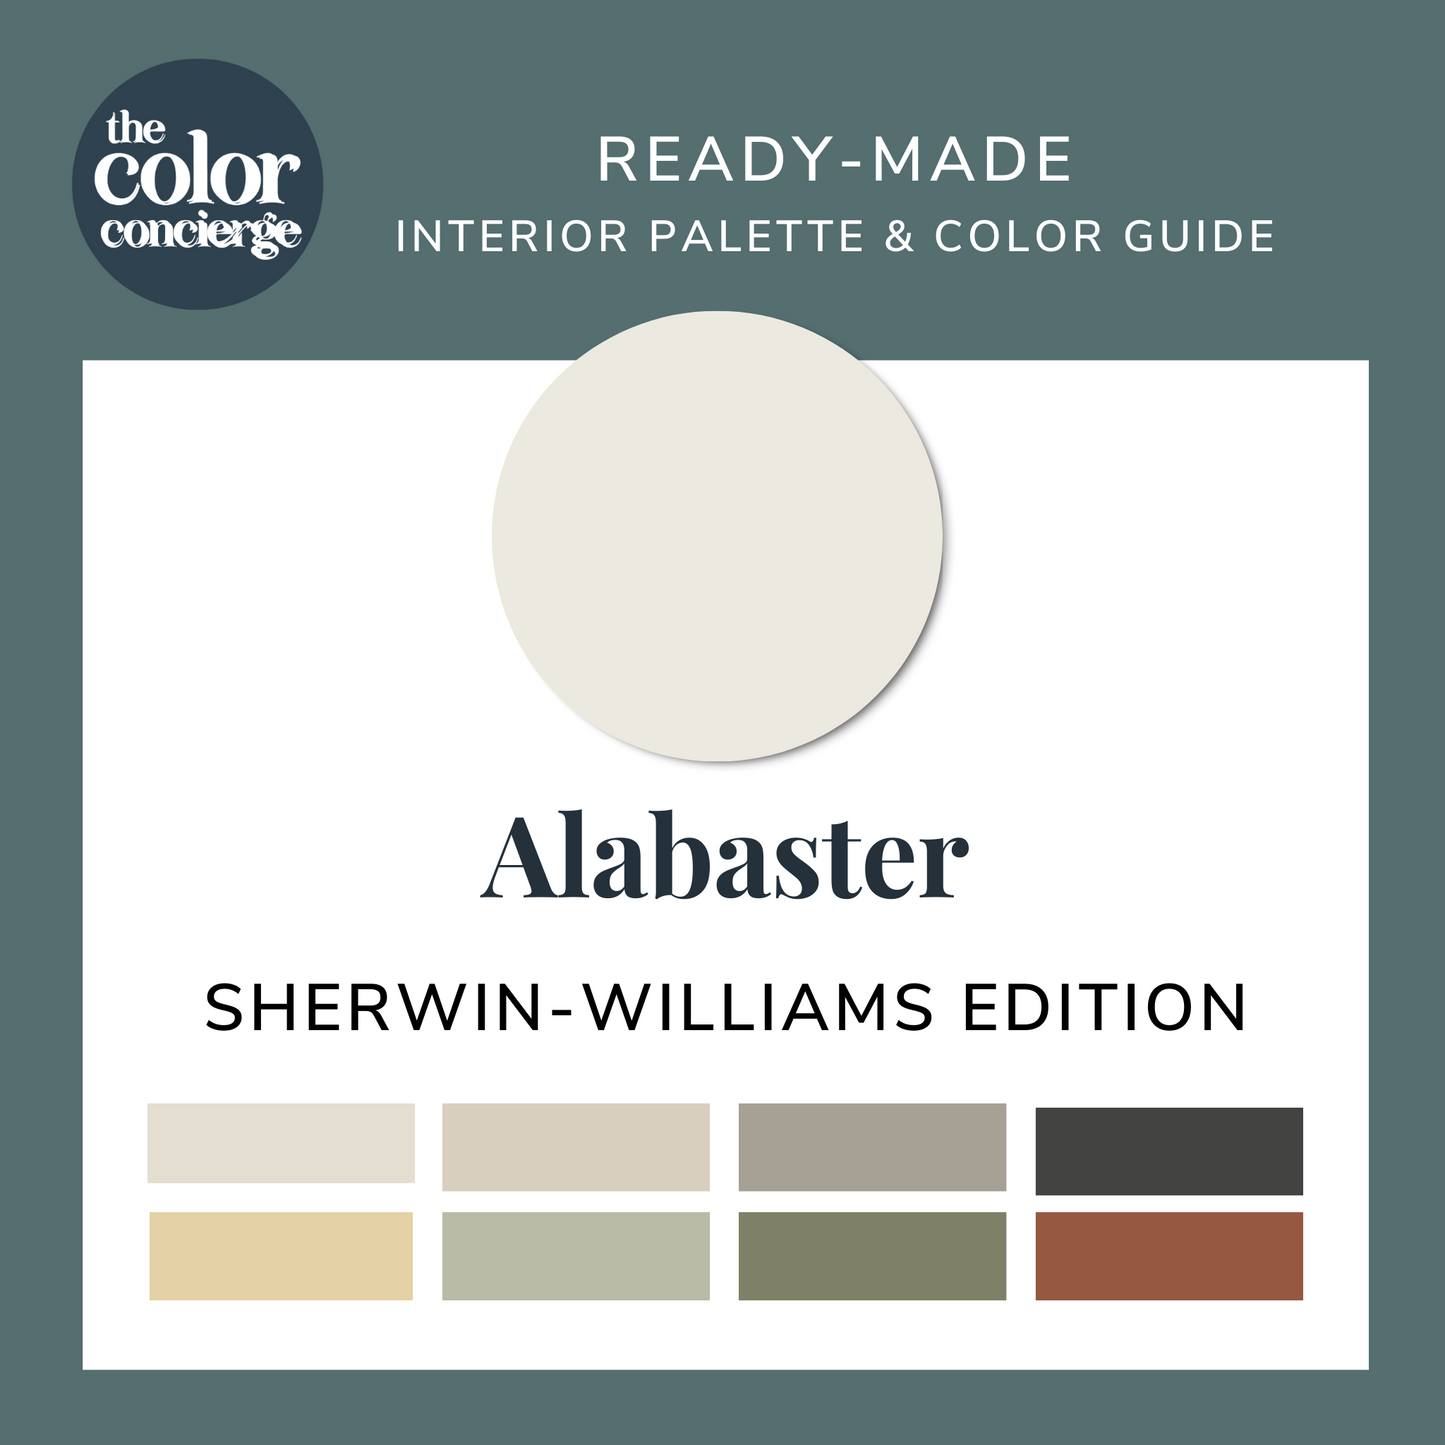 Sherwin-Williams Alabaster color palette guide